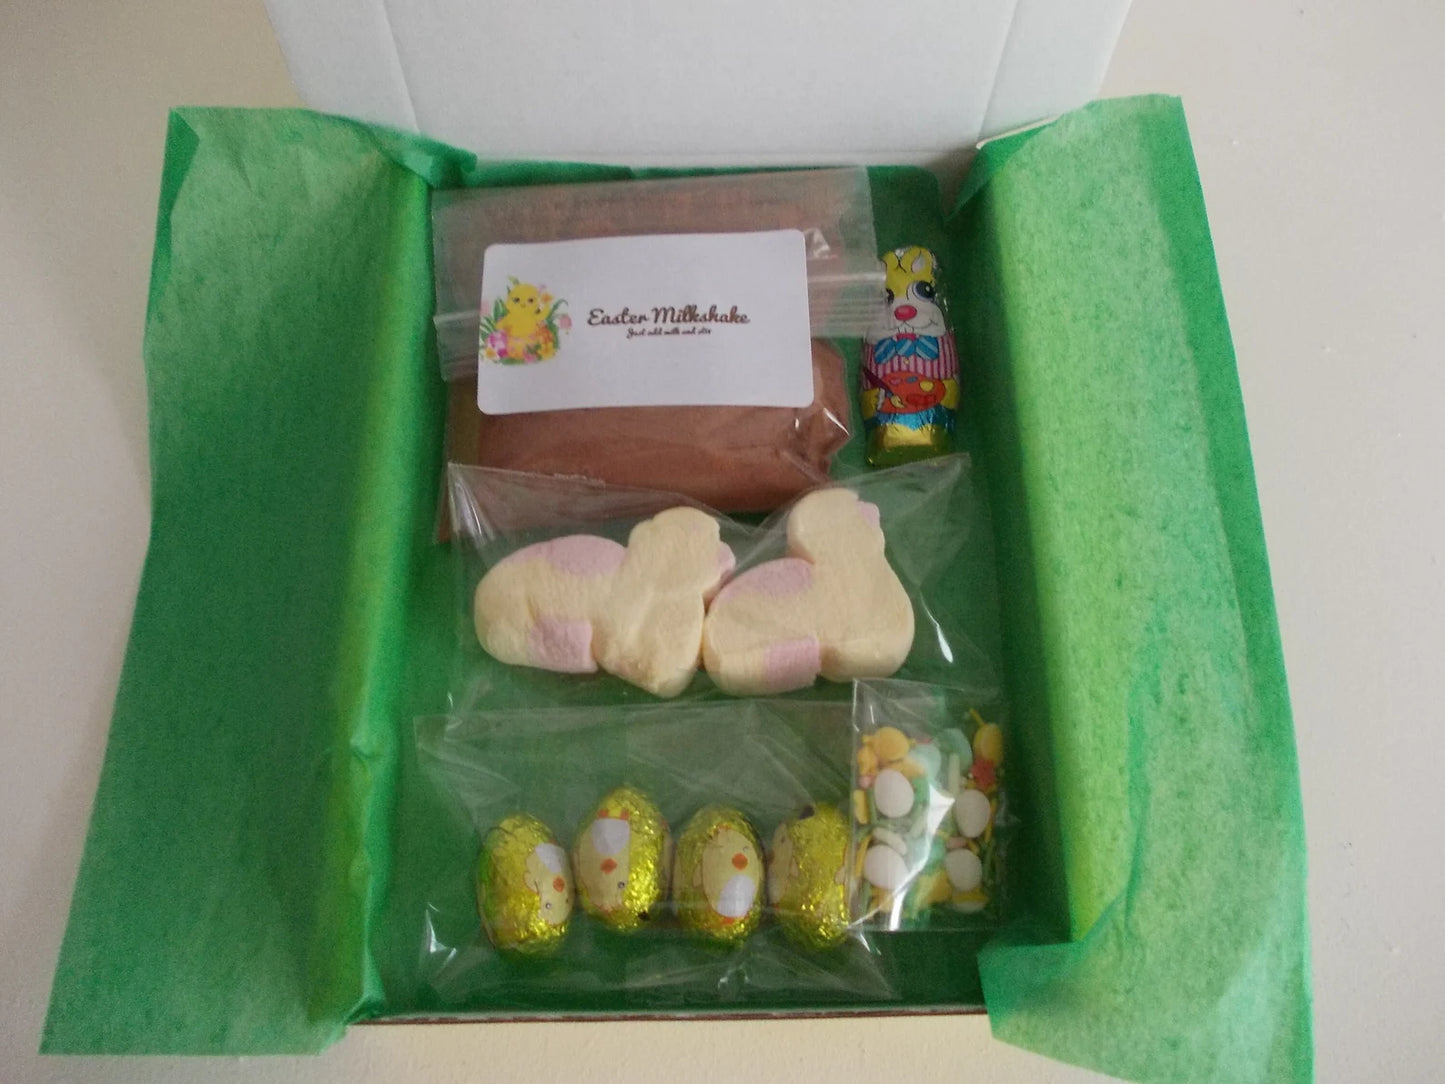 Easter milk shake kit letterbox gift box, grate Easter egg alternative, Kids chocolate gift, Easter basket filler or party favour